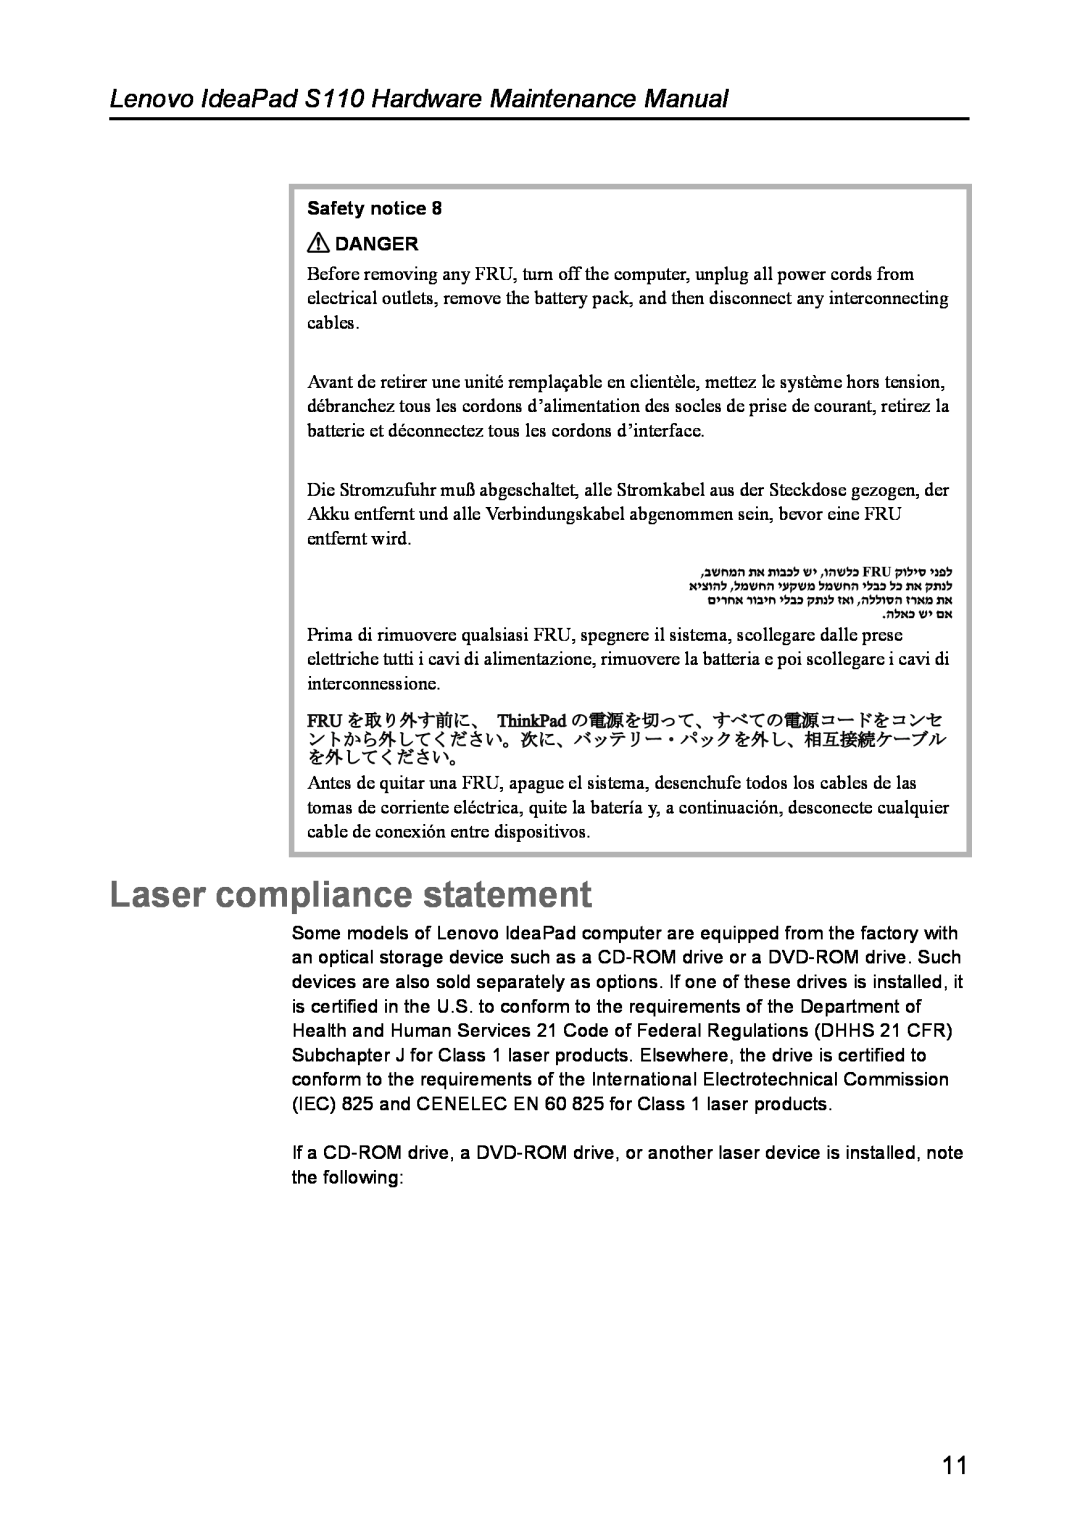 Lenovo manual Laser compliance statement, Lenovo IdeaPad S110 Hardware Maintenance Manual, Safety notice DANGER 